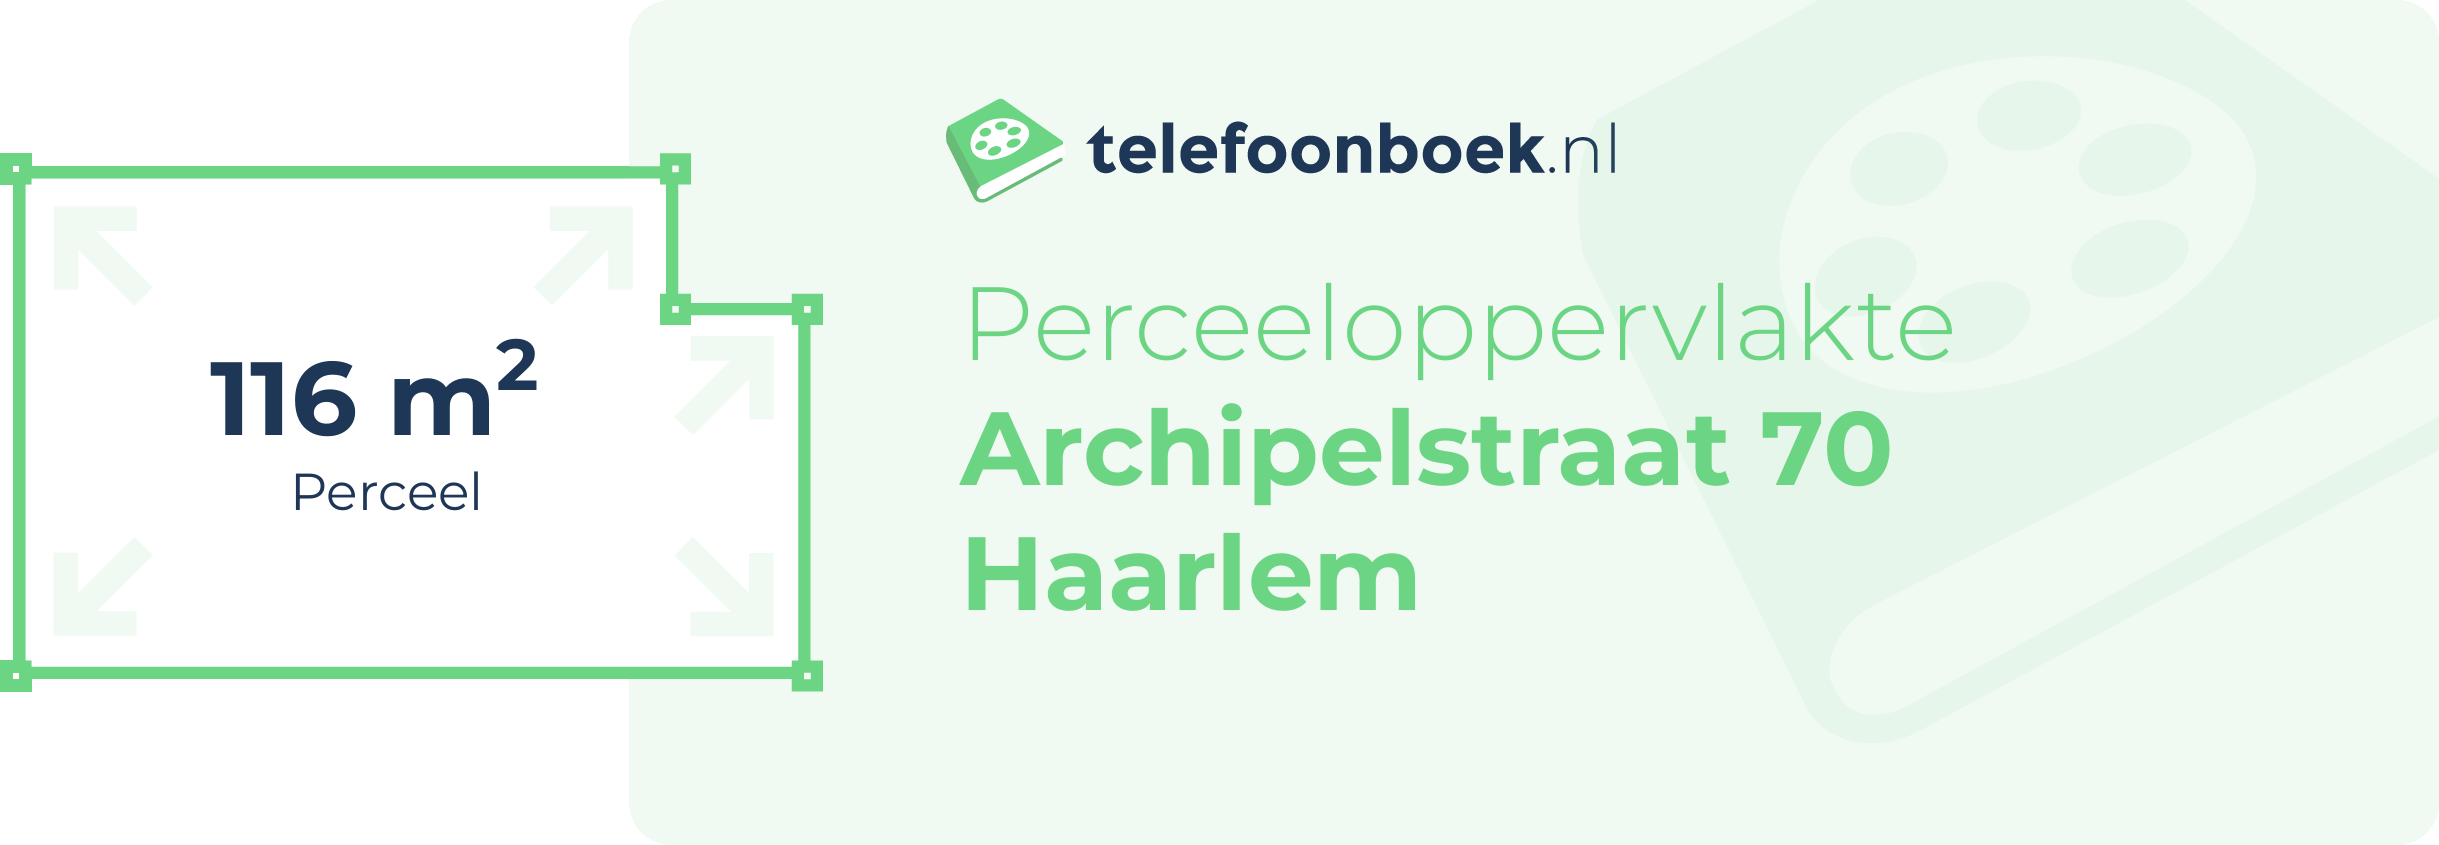 Perceeloppervlakte Archipelstraat 70 Haarlem